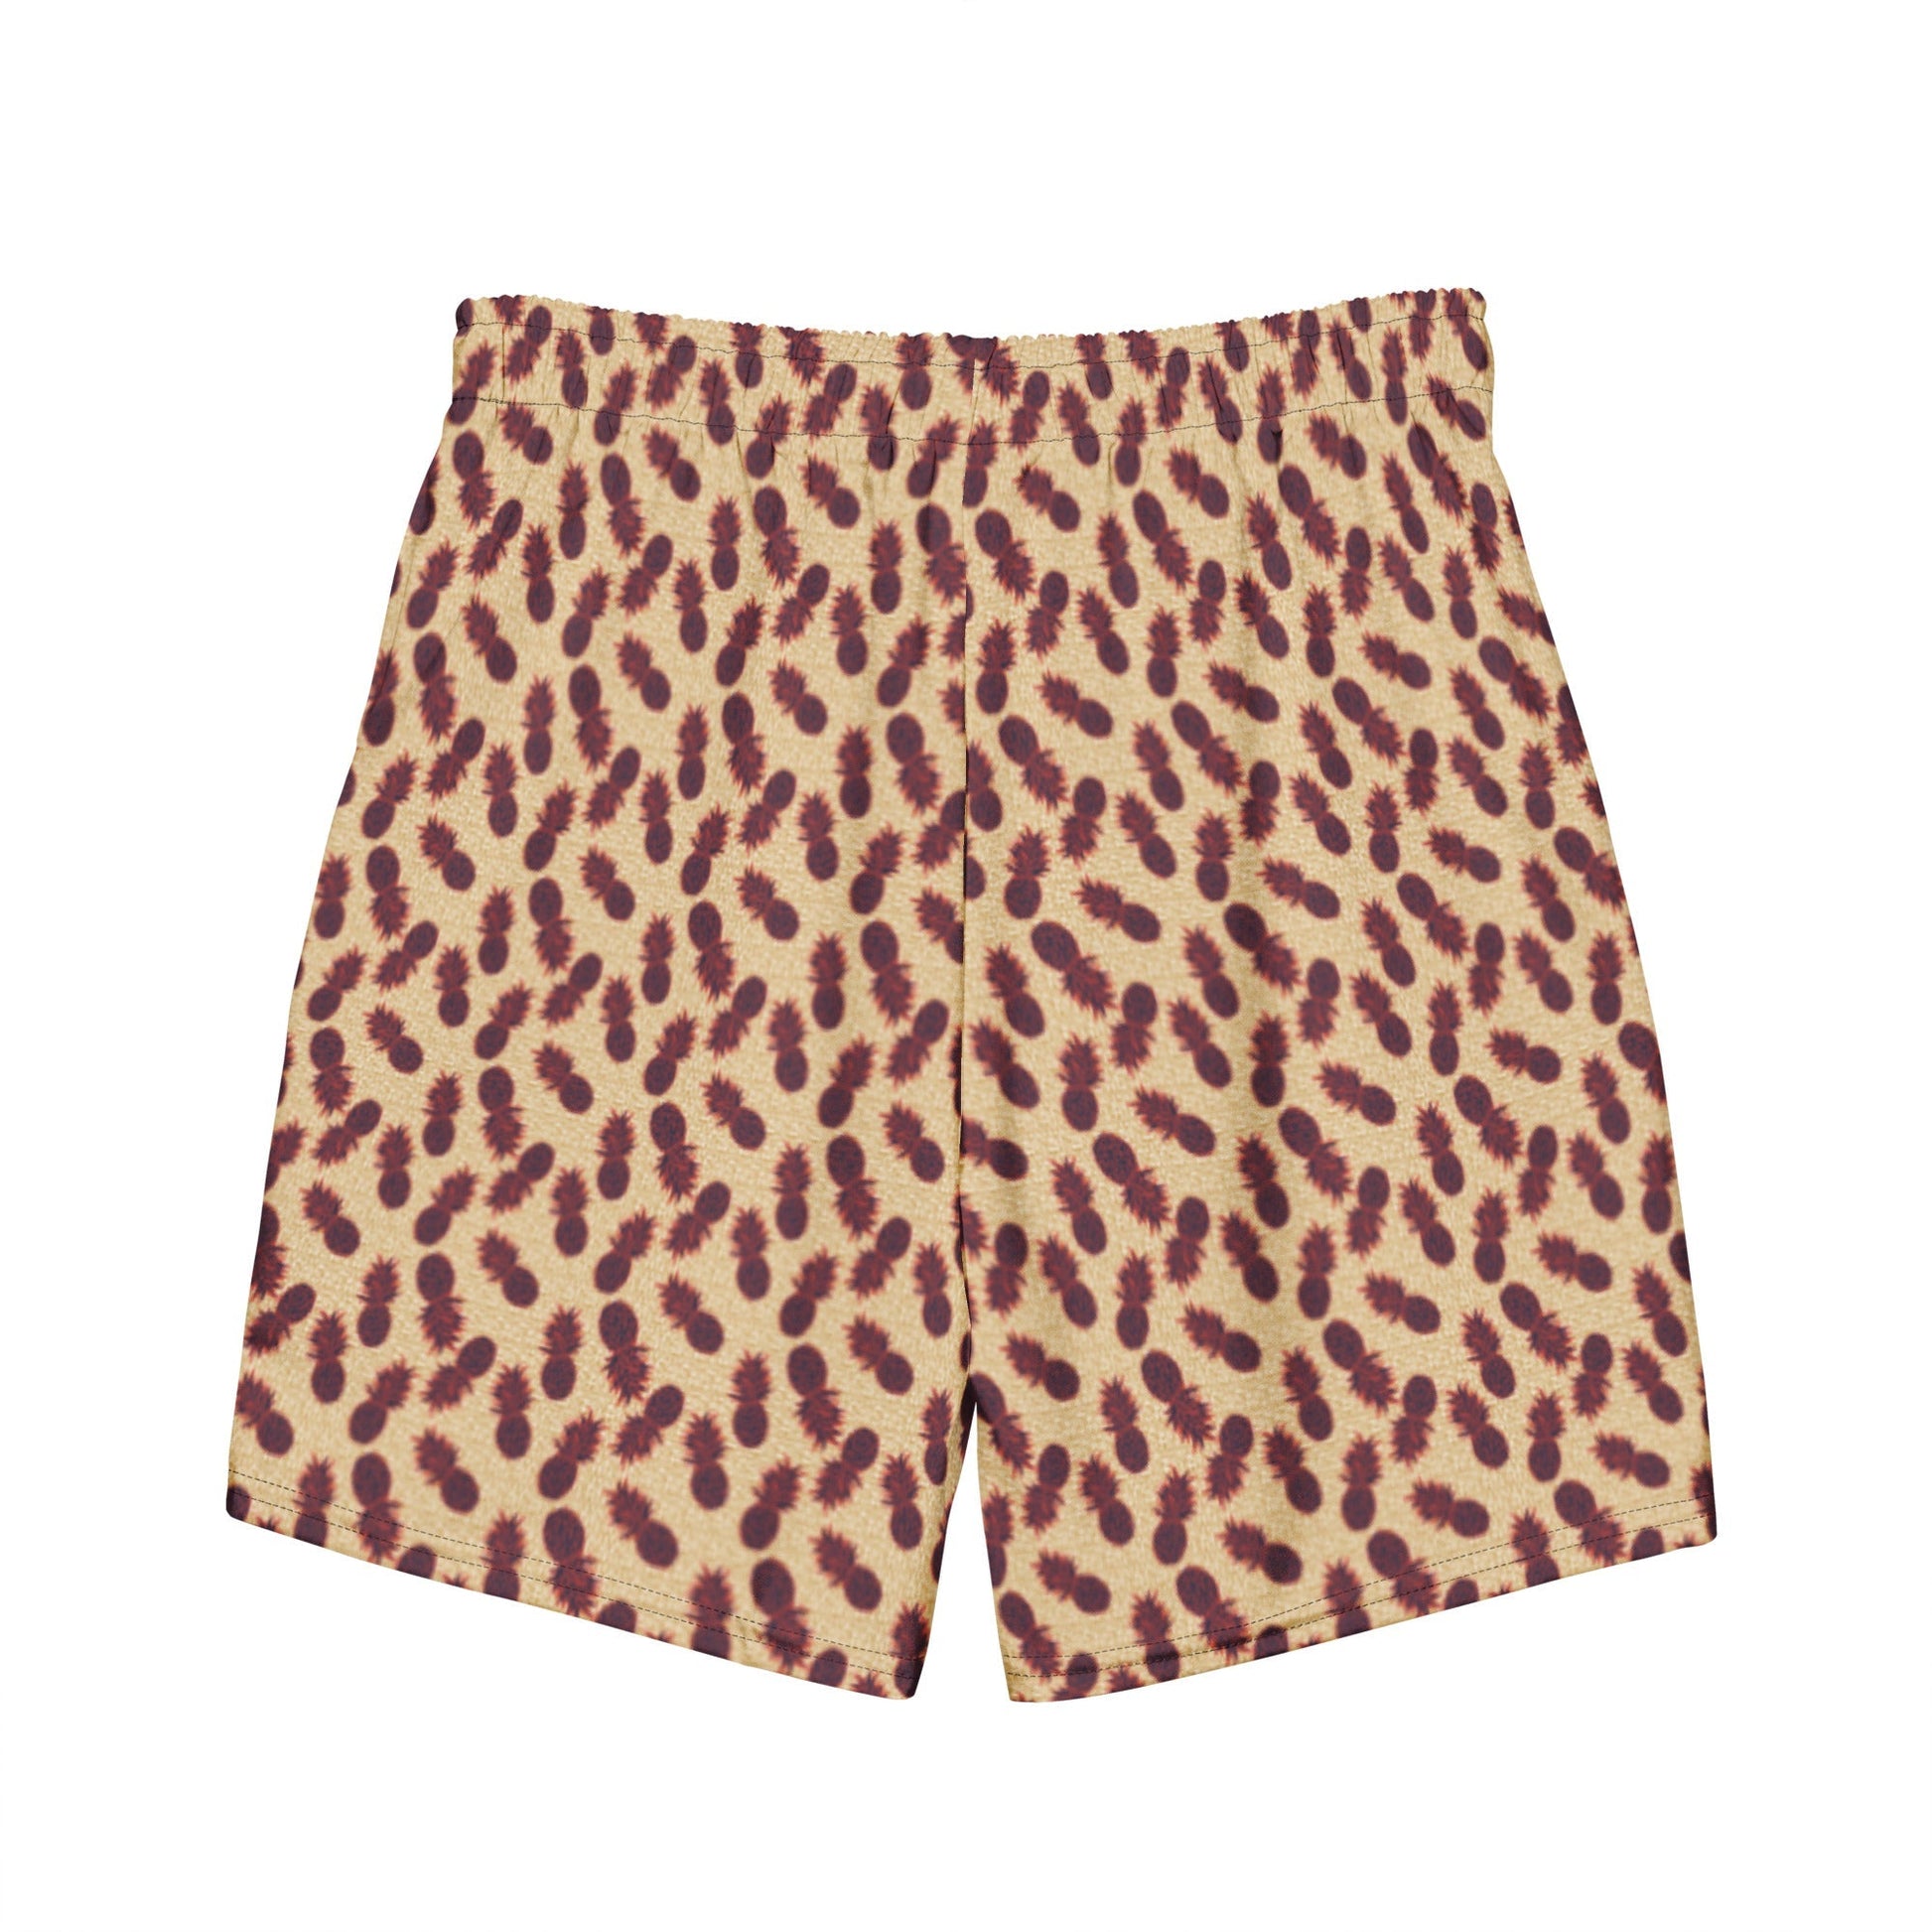 Men's Pineapple Beach Board Shorts - Tropical Seas Clothing 